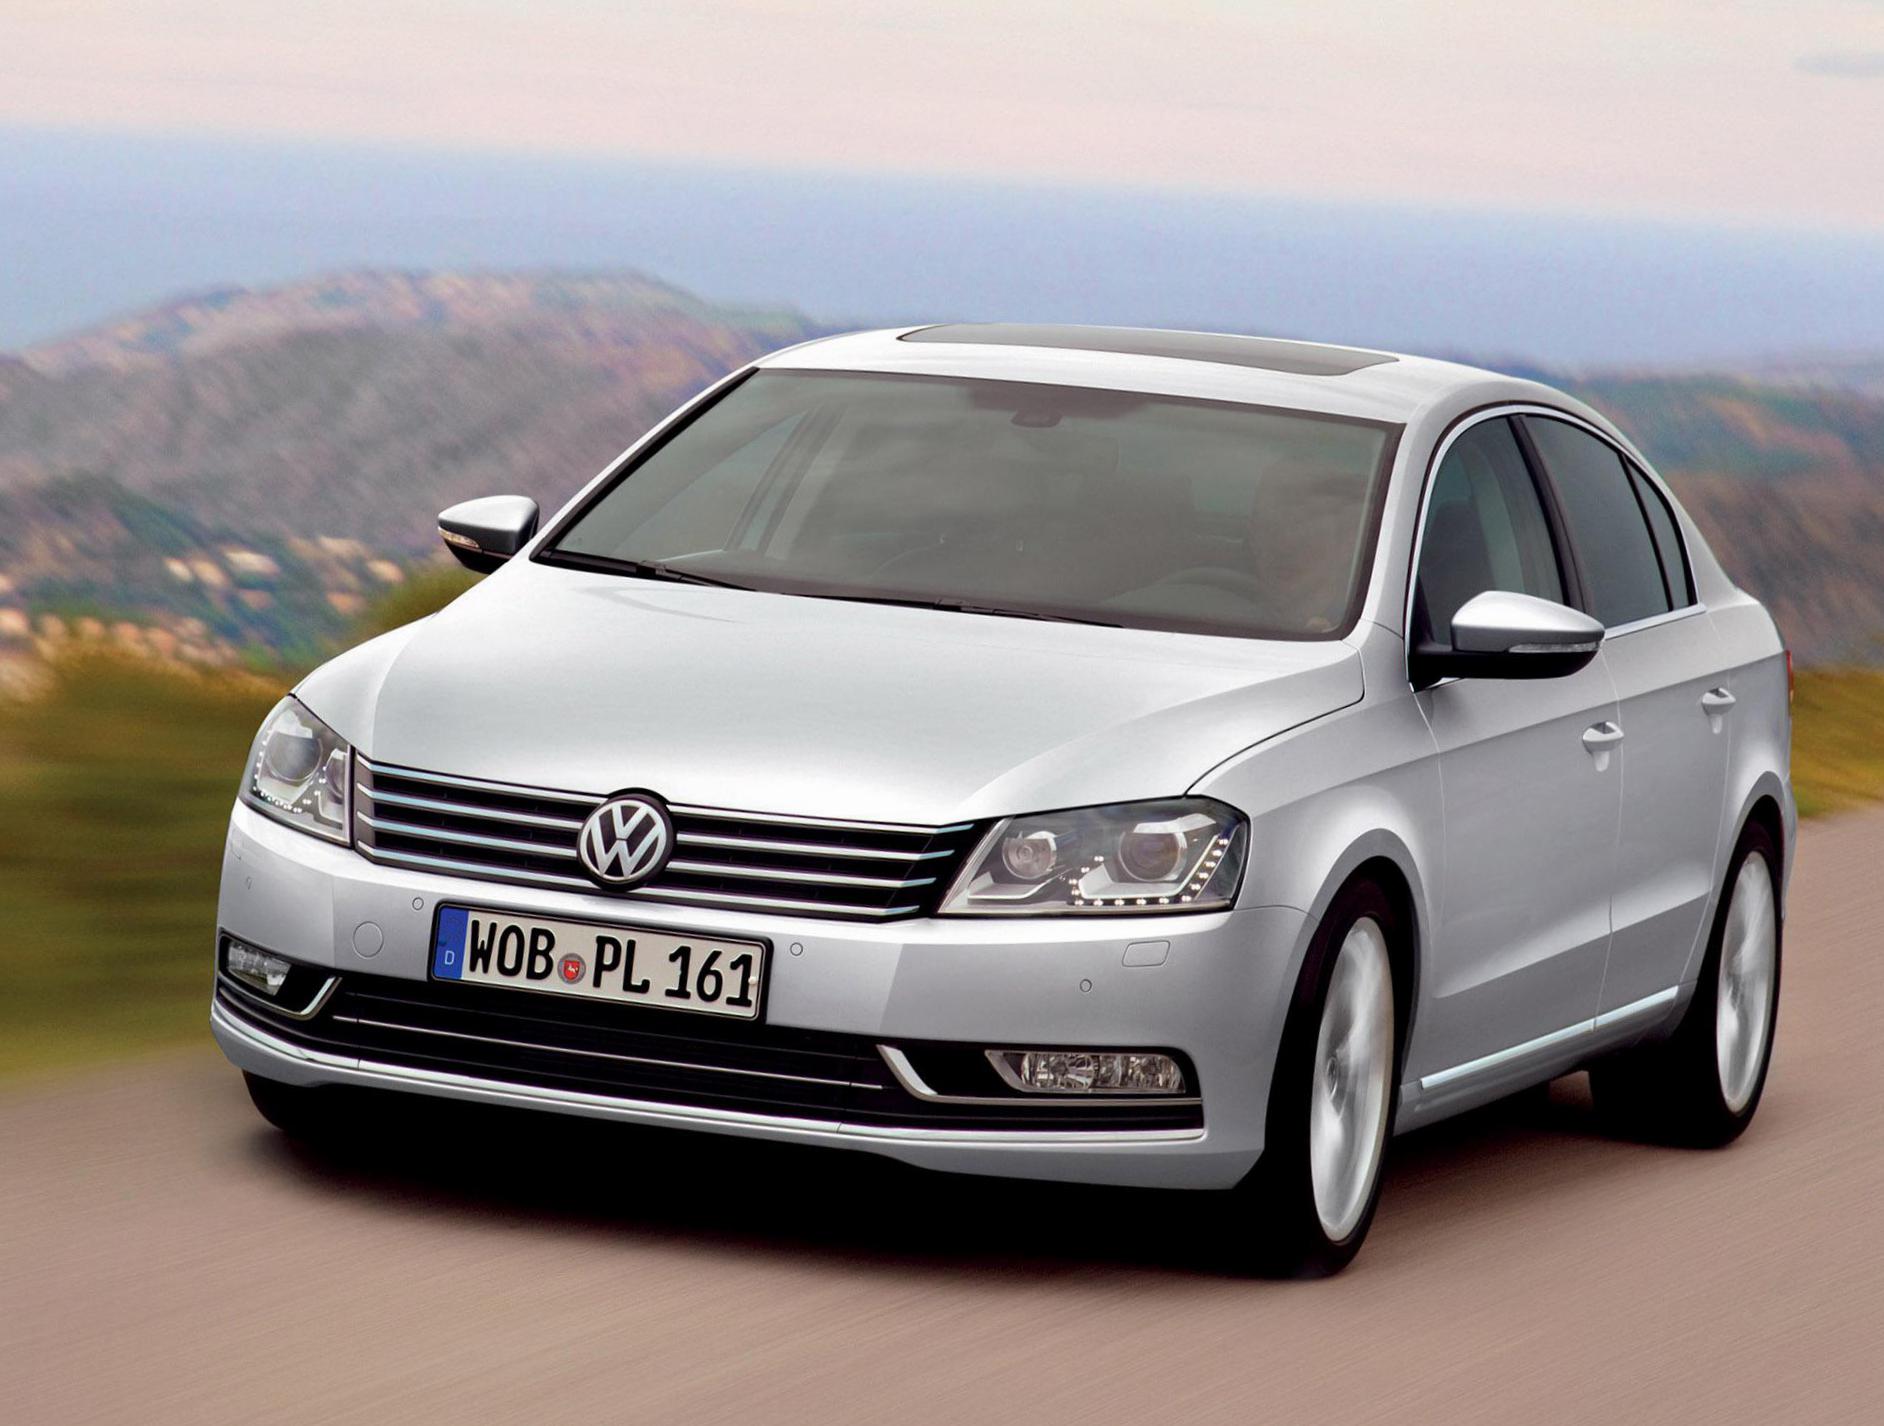 Volkswagen Passat Variant lease hatchback